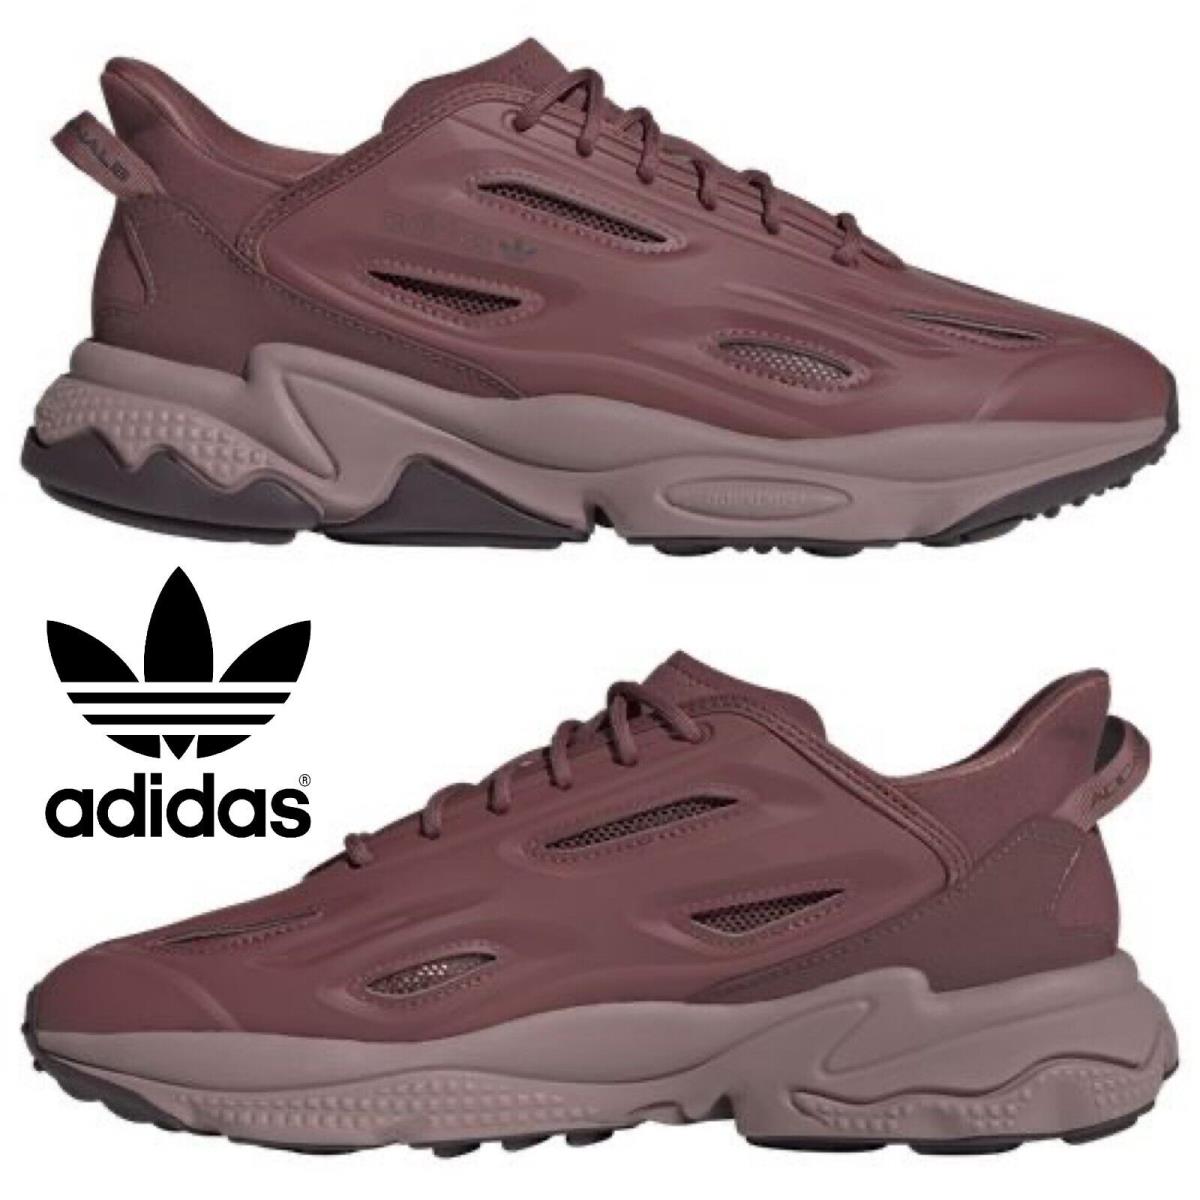 Adidas Ozweego Celox Men`s Sneakers Comfort Sport Running Shoes Bold Chunky - Maroon , Maroon/Beige Manufacturer